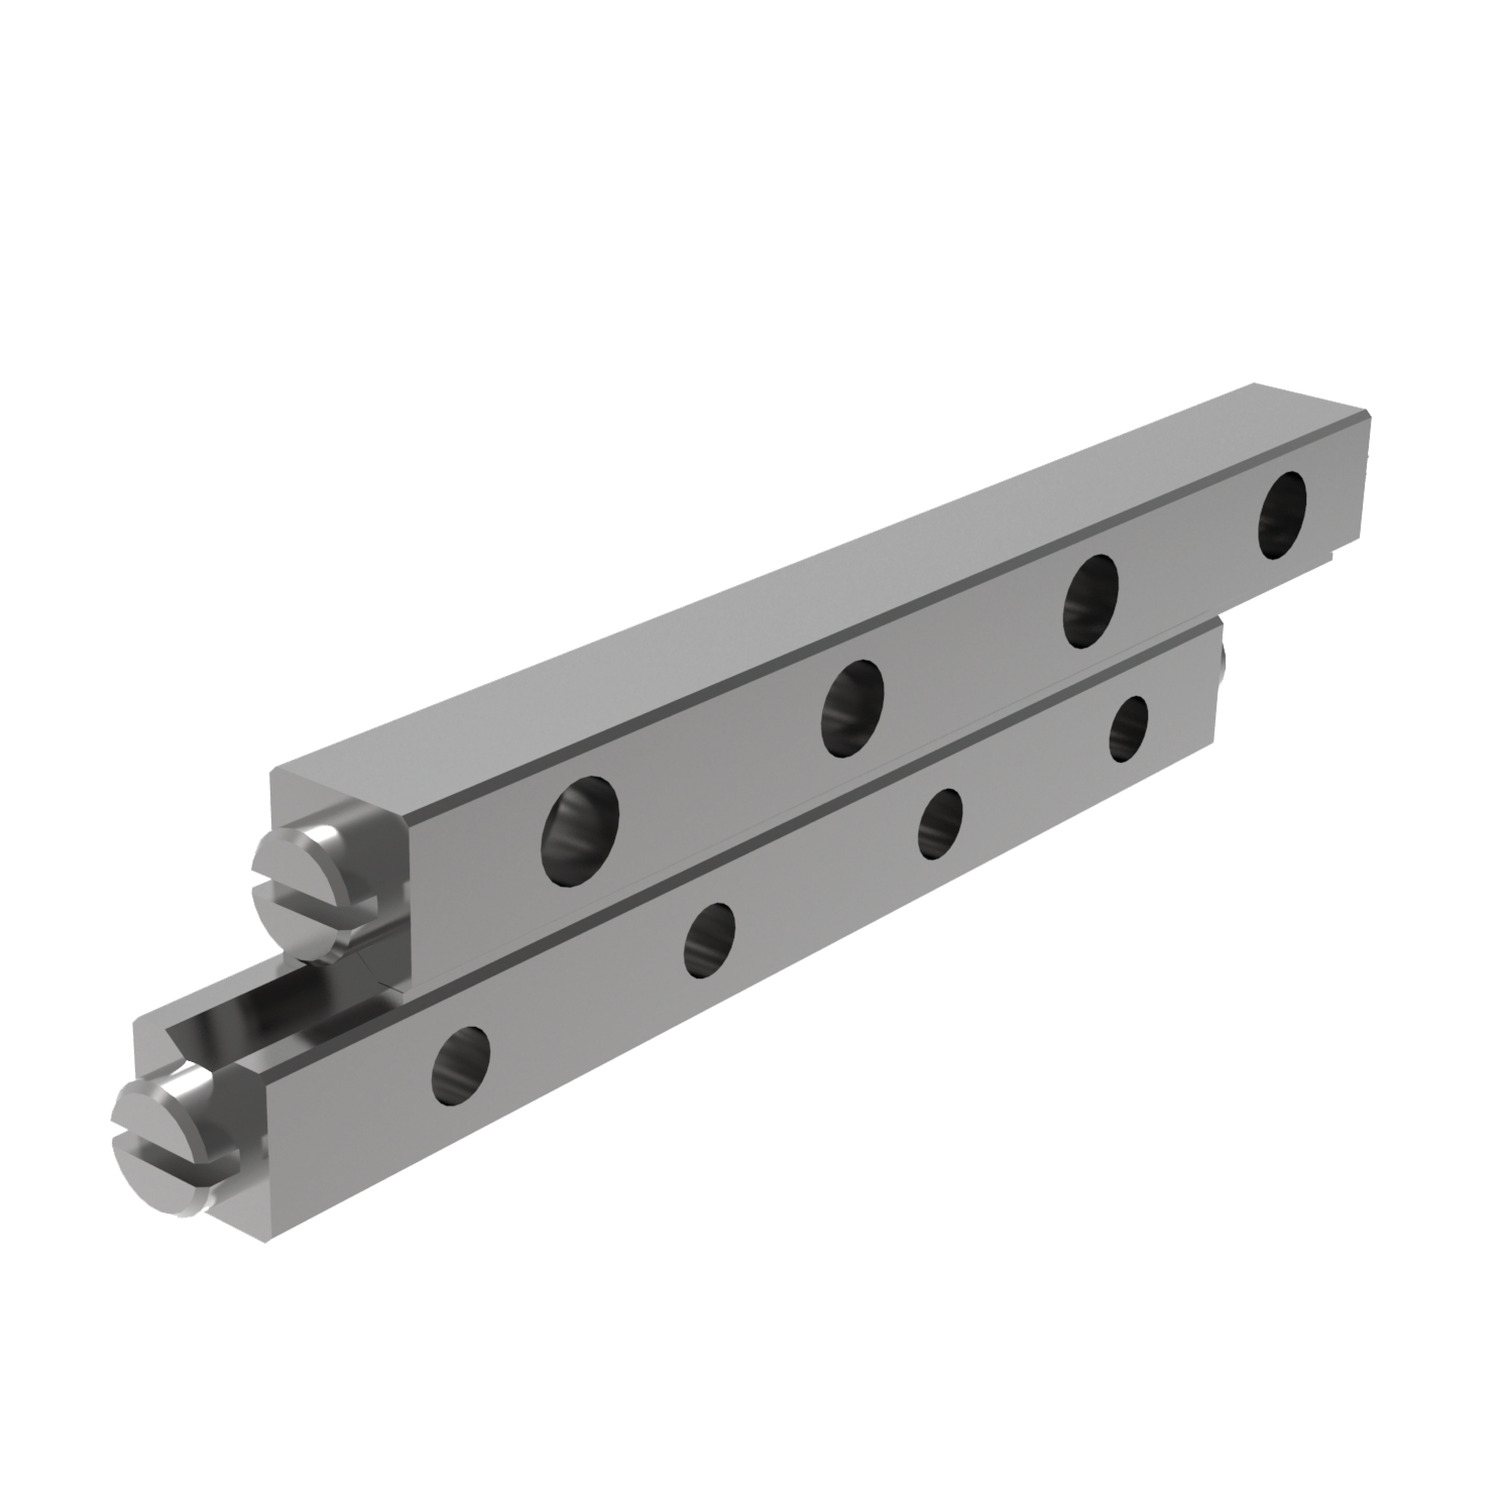 L1000.01-040 Crossed roller rail sets size 1 x 40mm Standard linear bearings sets consists of: 4 pcs. Rails, 2 pcs. roller cages, 8 pcs. end screws EC:20161910 WG:05063055211215